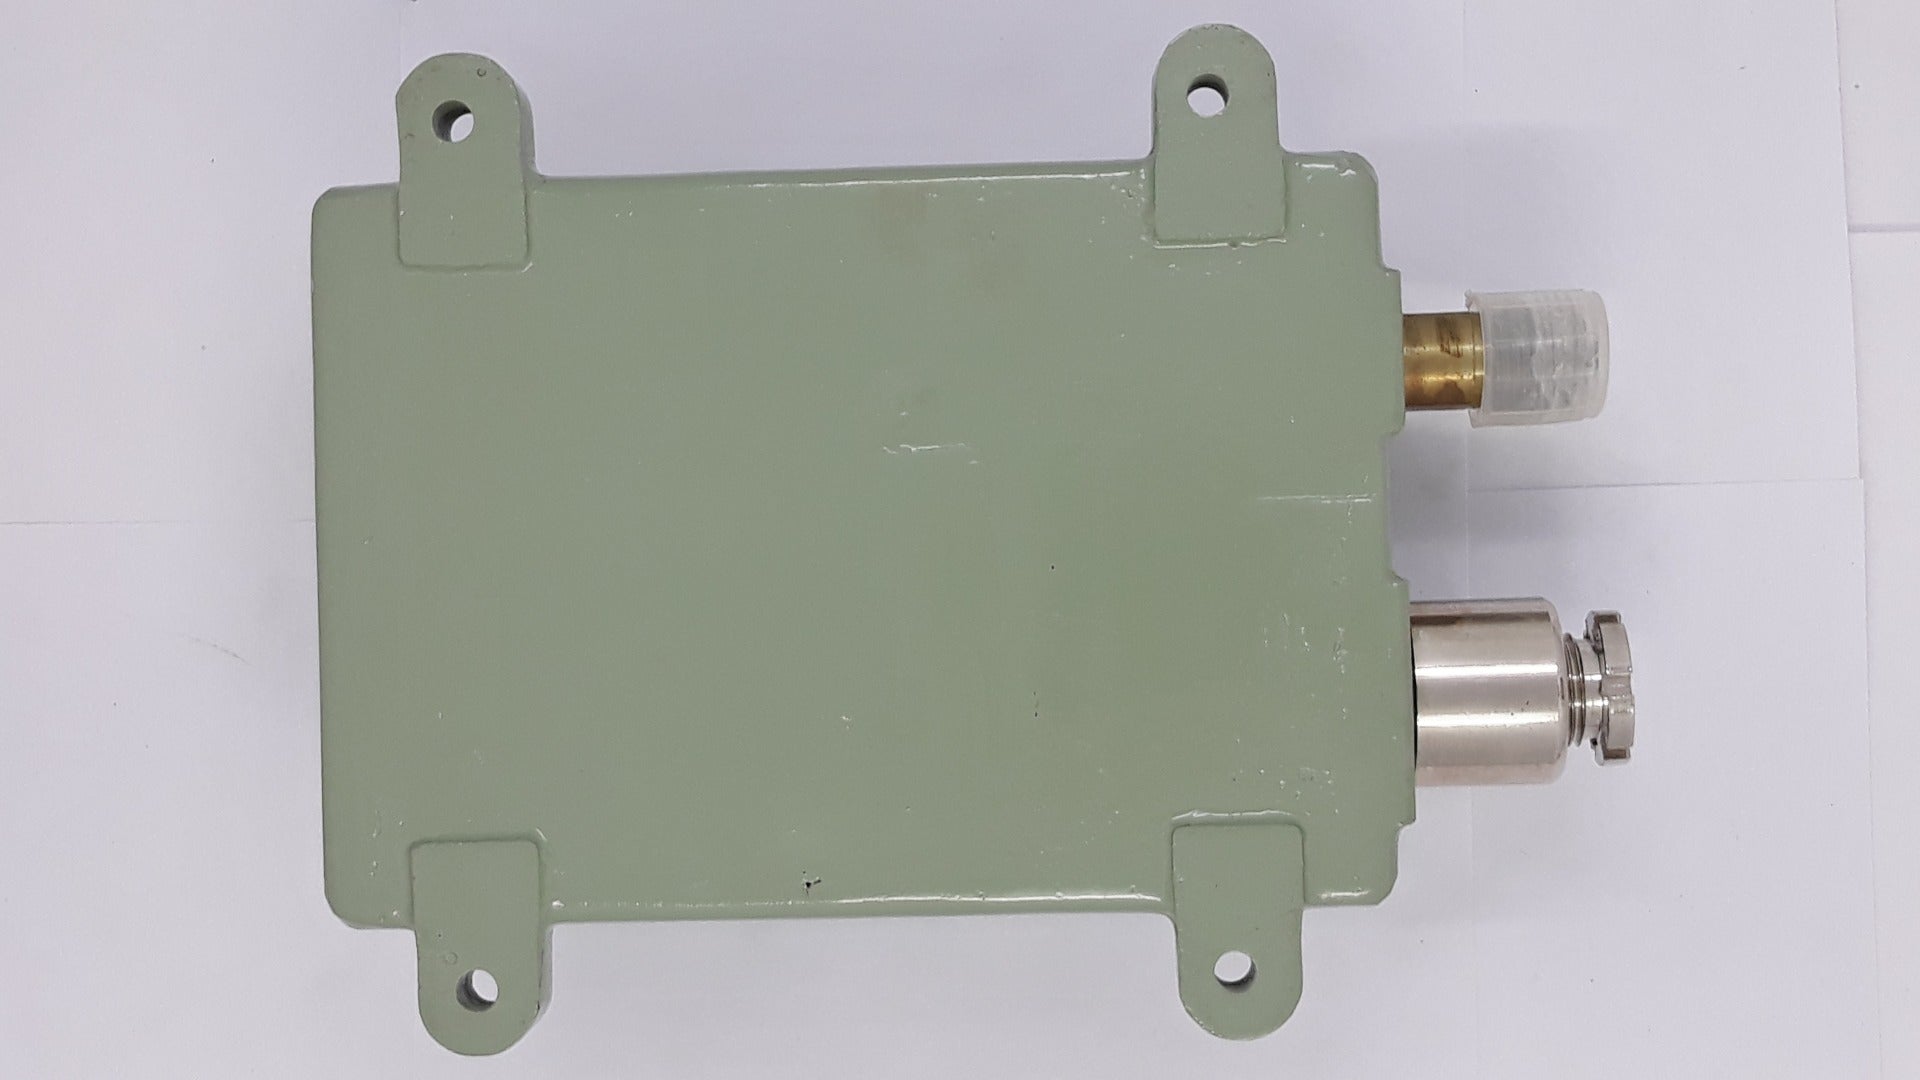 Kobata ba-2b pressure switch 110v 15a